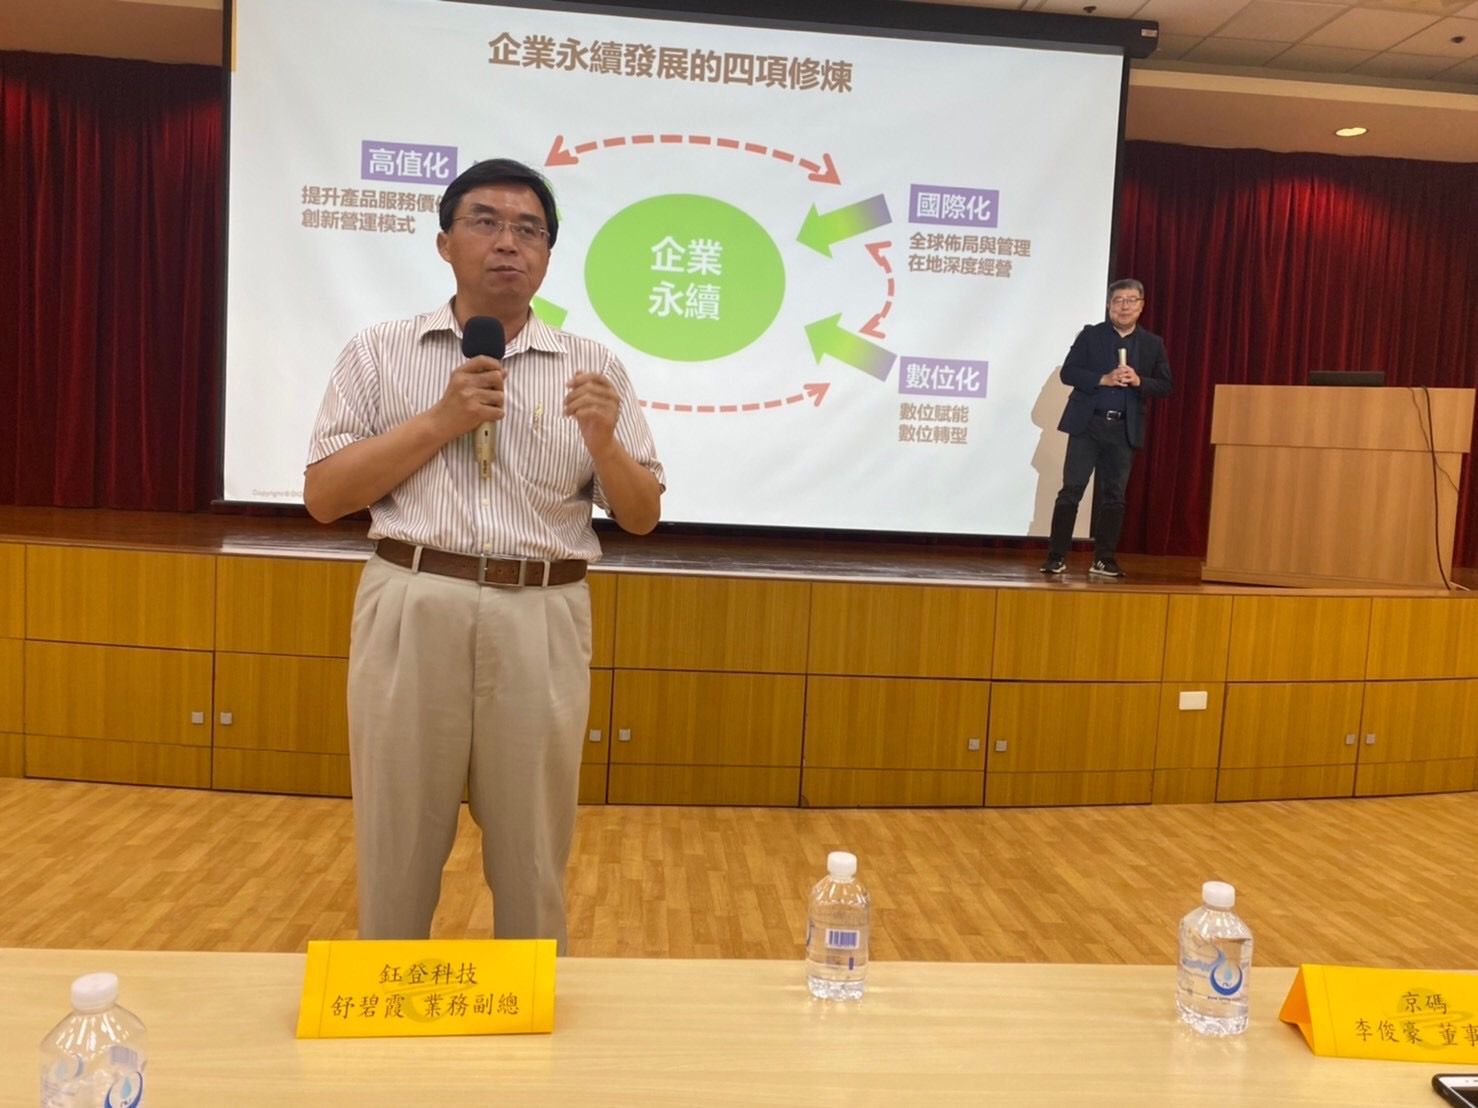 Dr. Owen Liは、2023年6月13日に新竹科学工業園区でマーケティング委員会の会議を主催します。